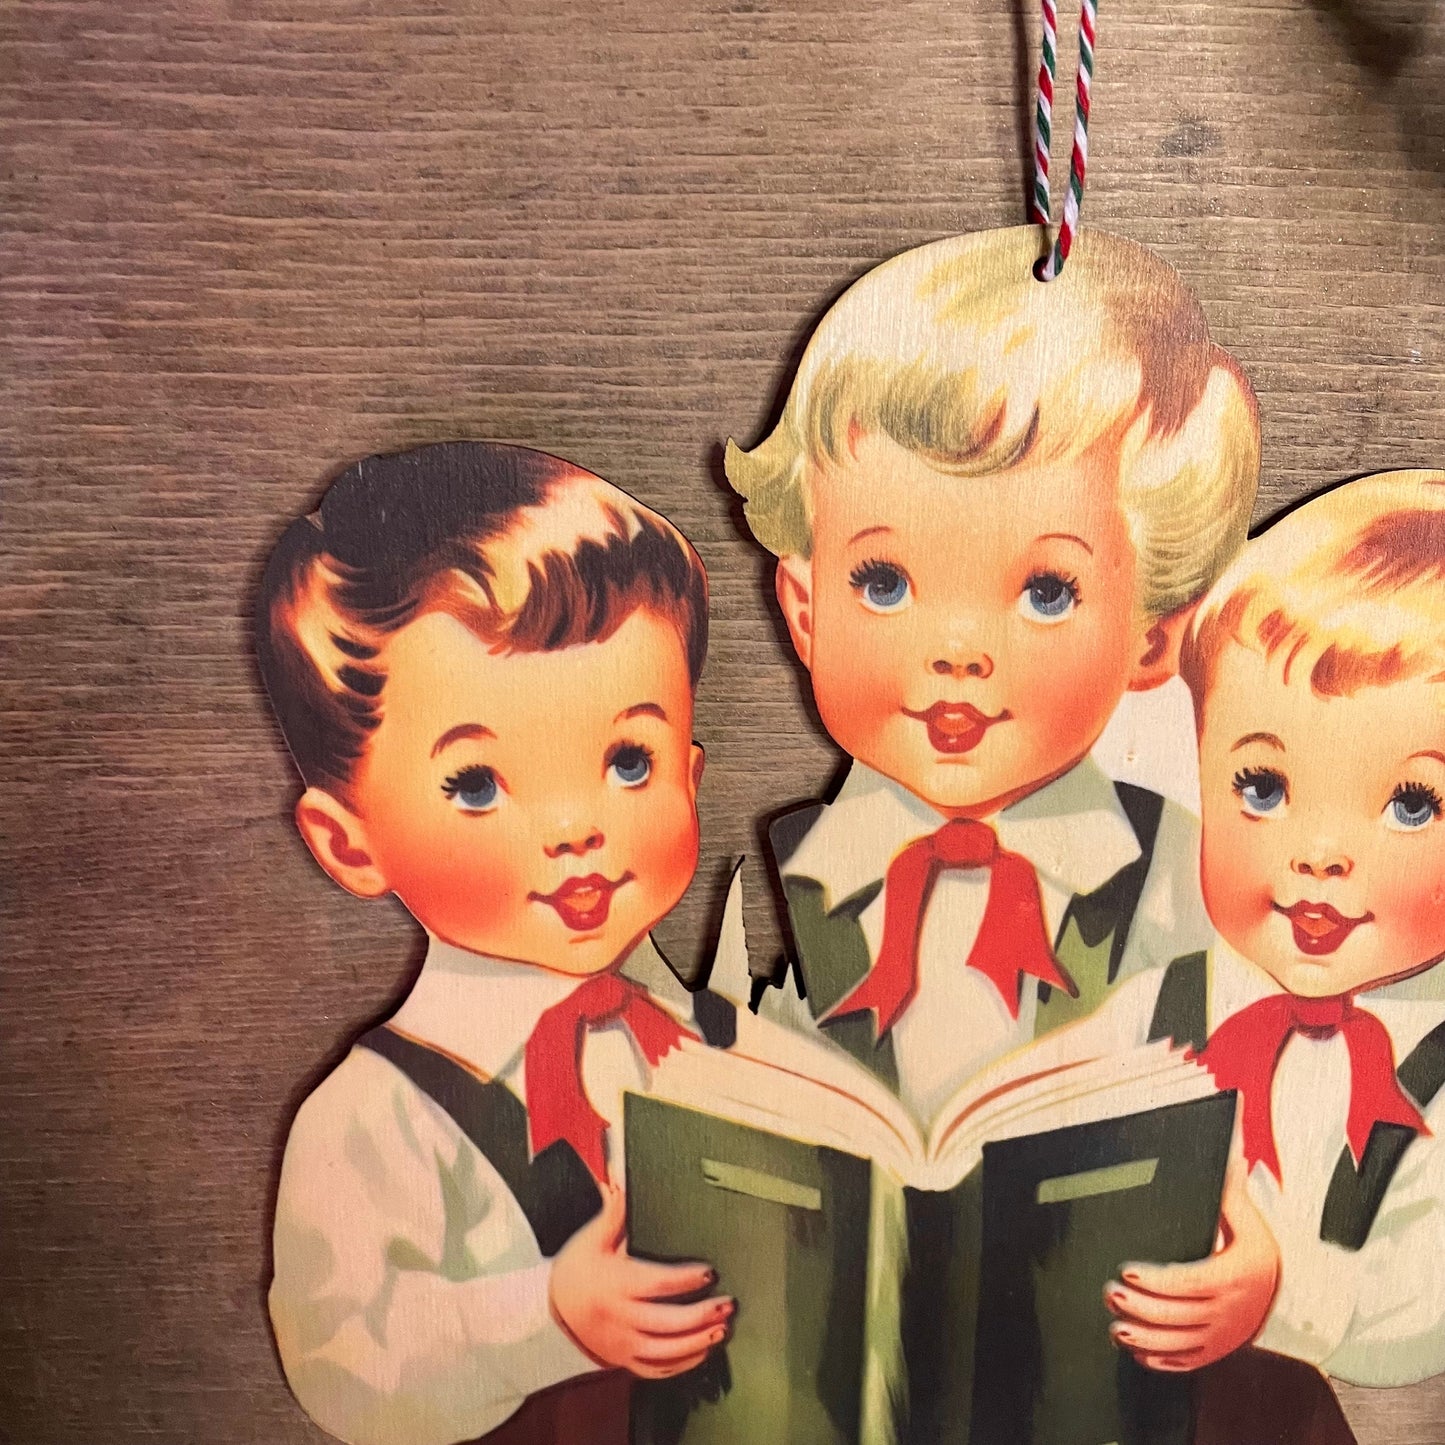 Vintage Christmas Choir Boys Hanging Decoration, wall hanging kitsch festive decor wooden laser cut